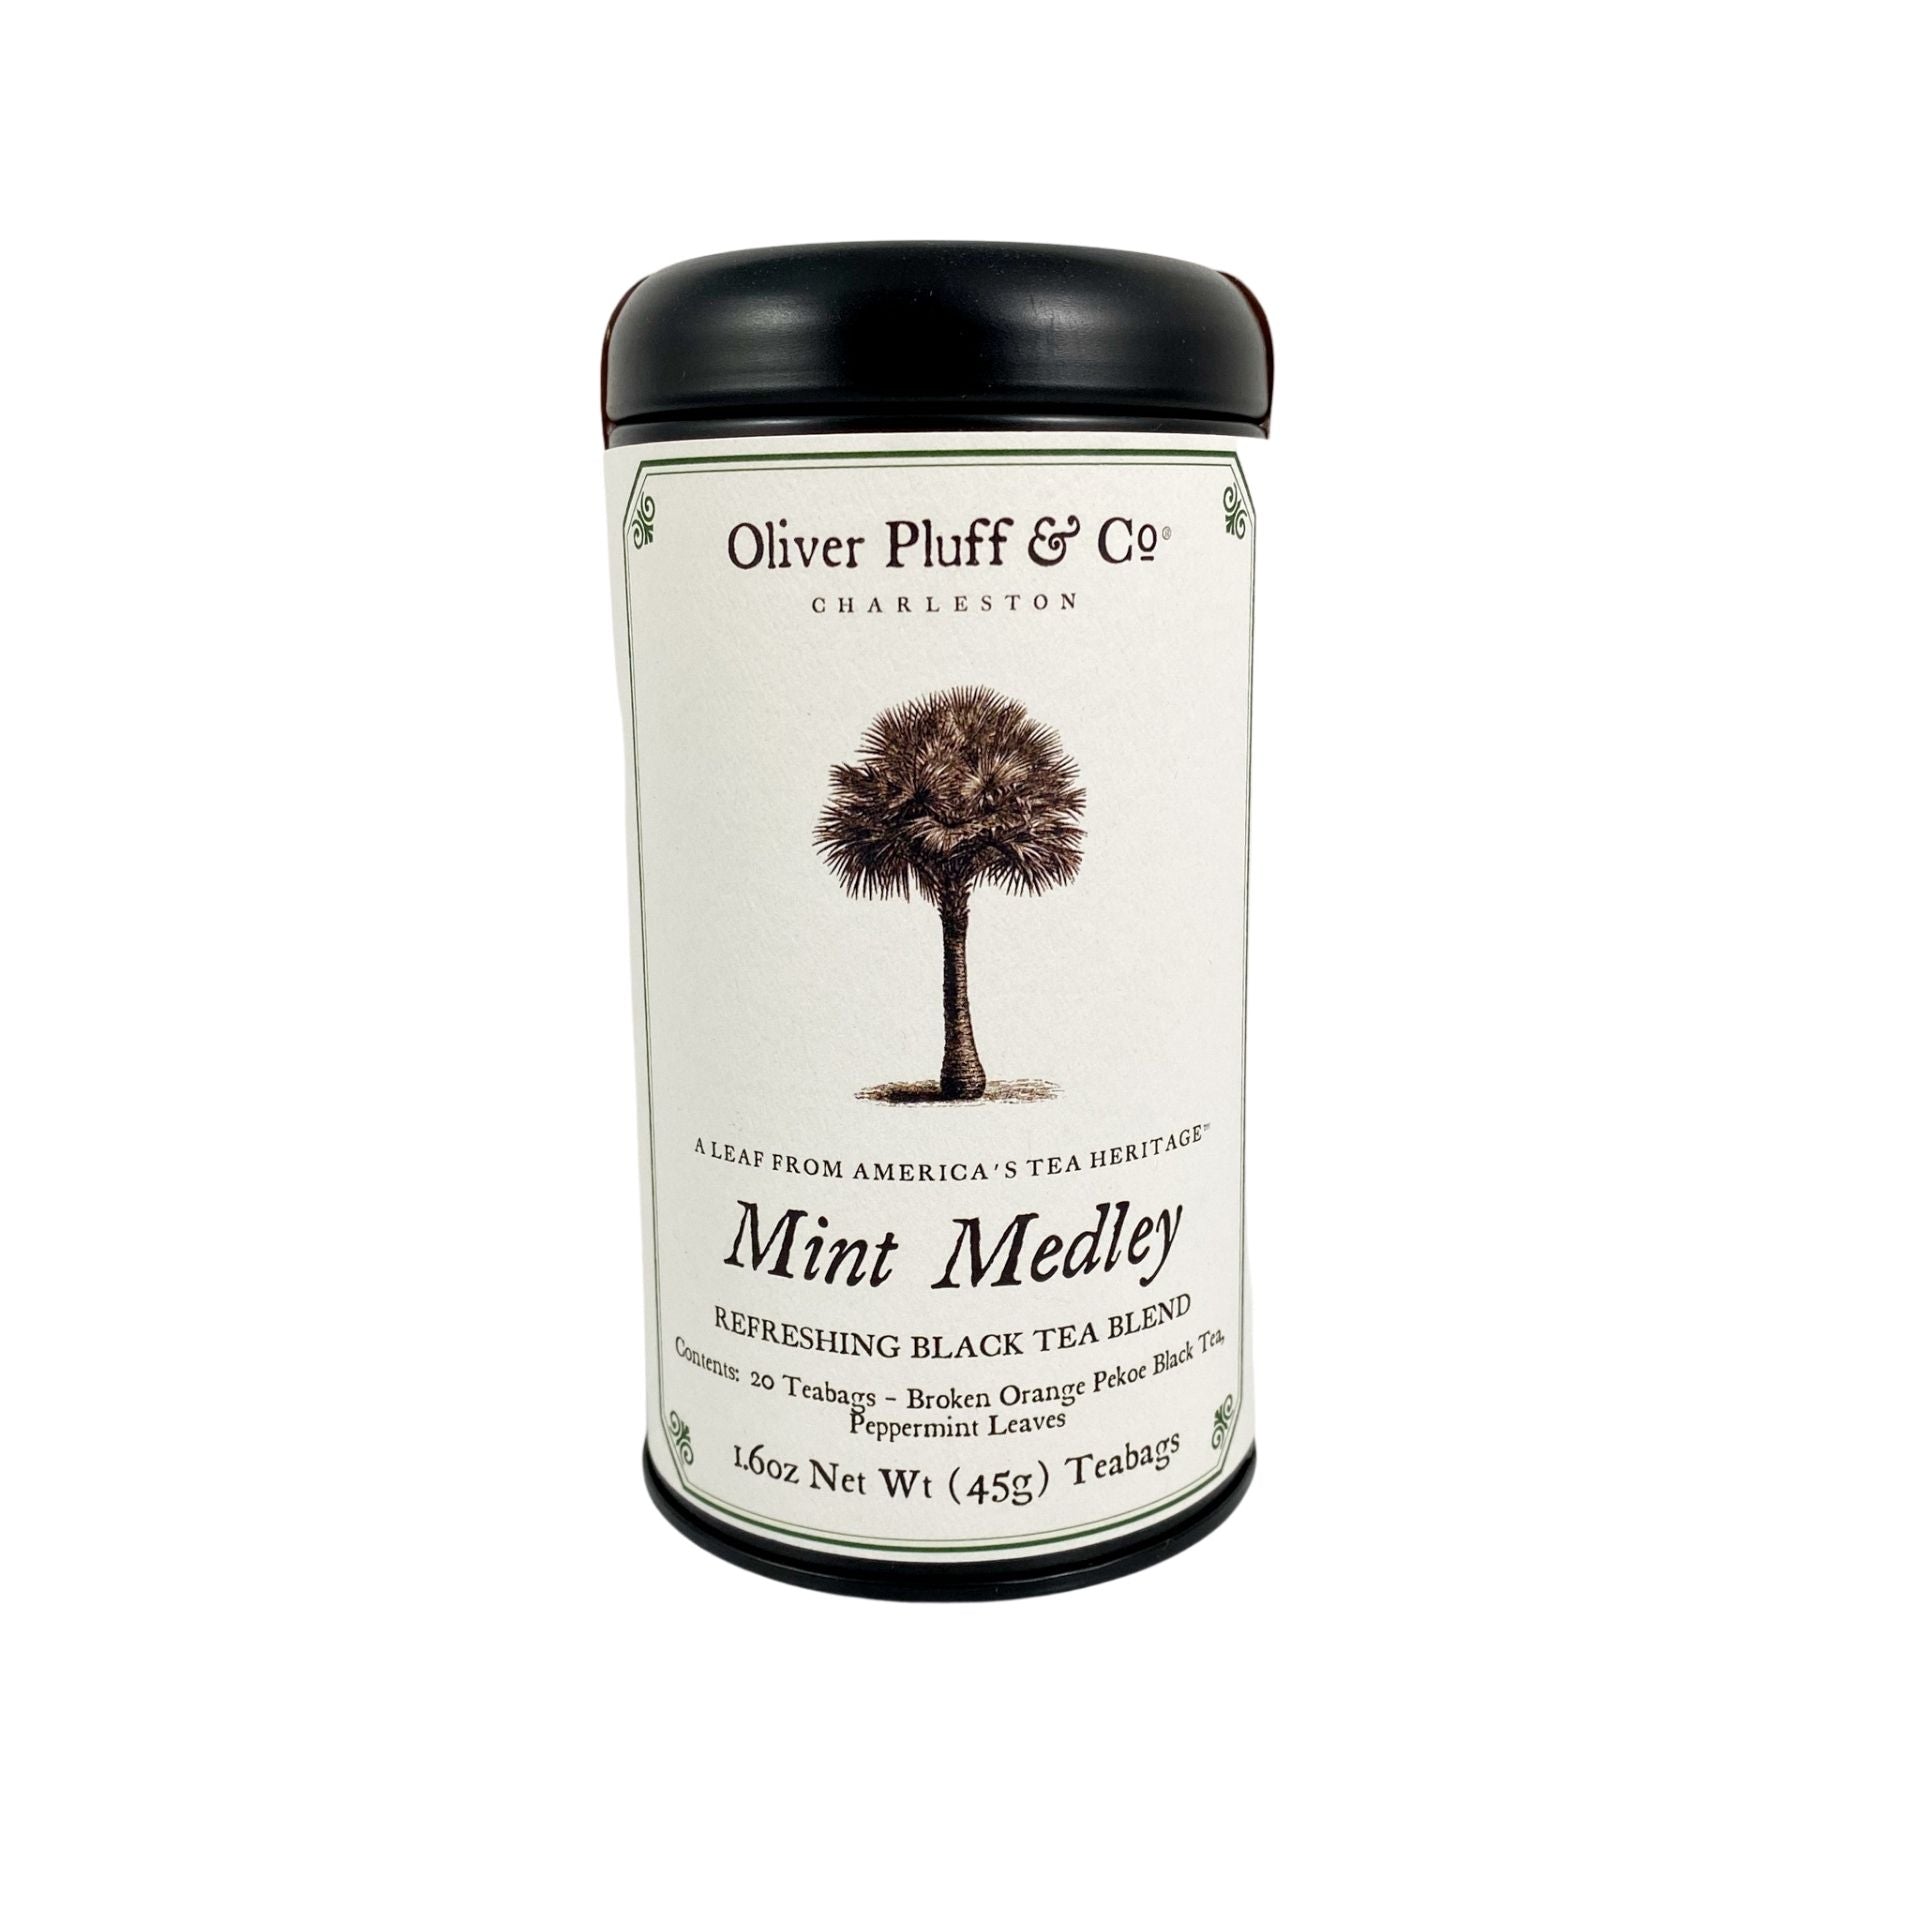 Mint Medley Tea